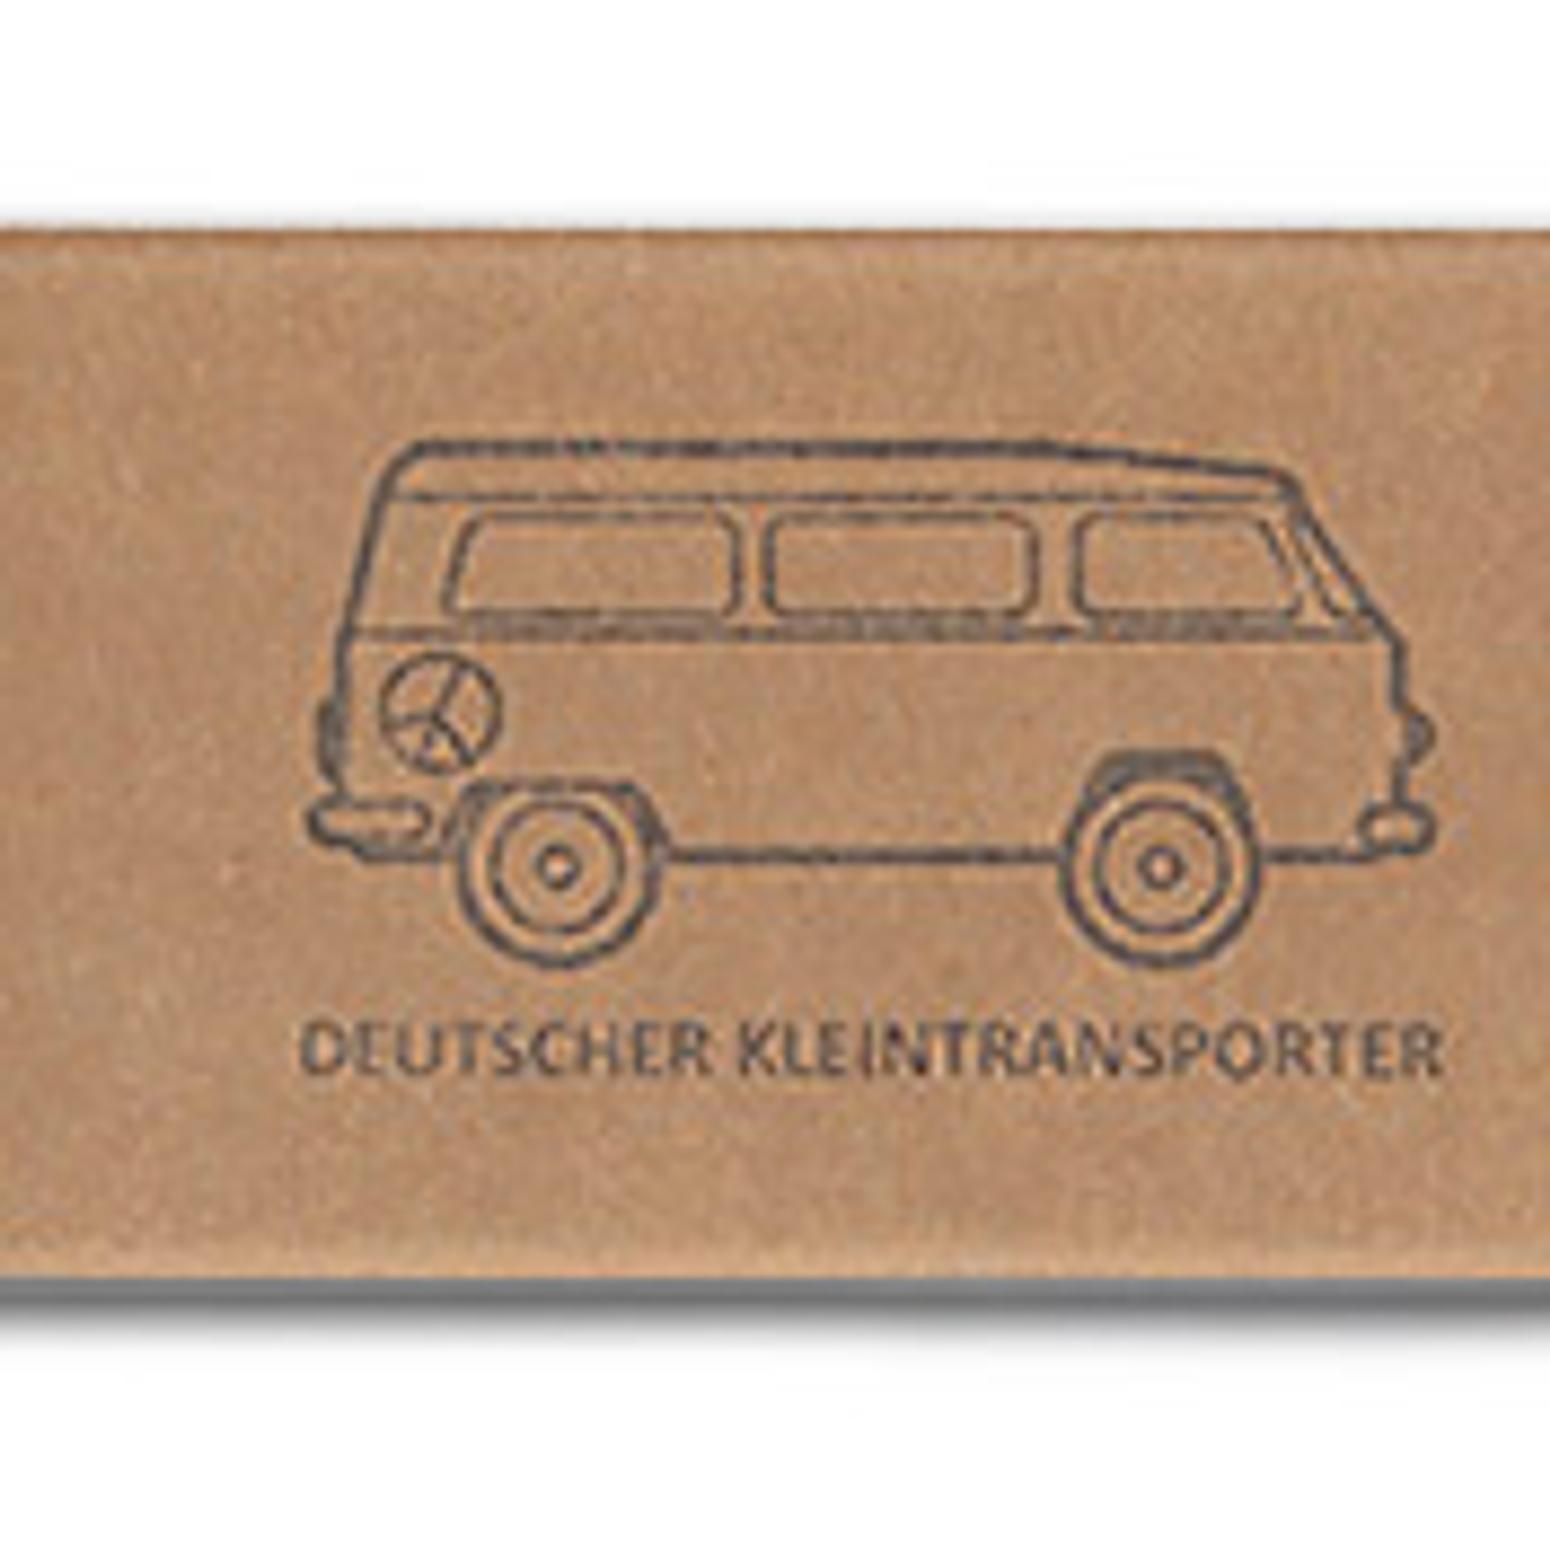 German Export Box